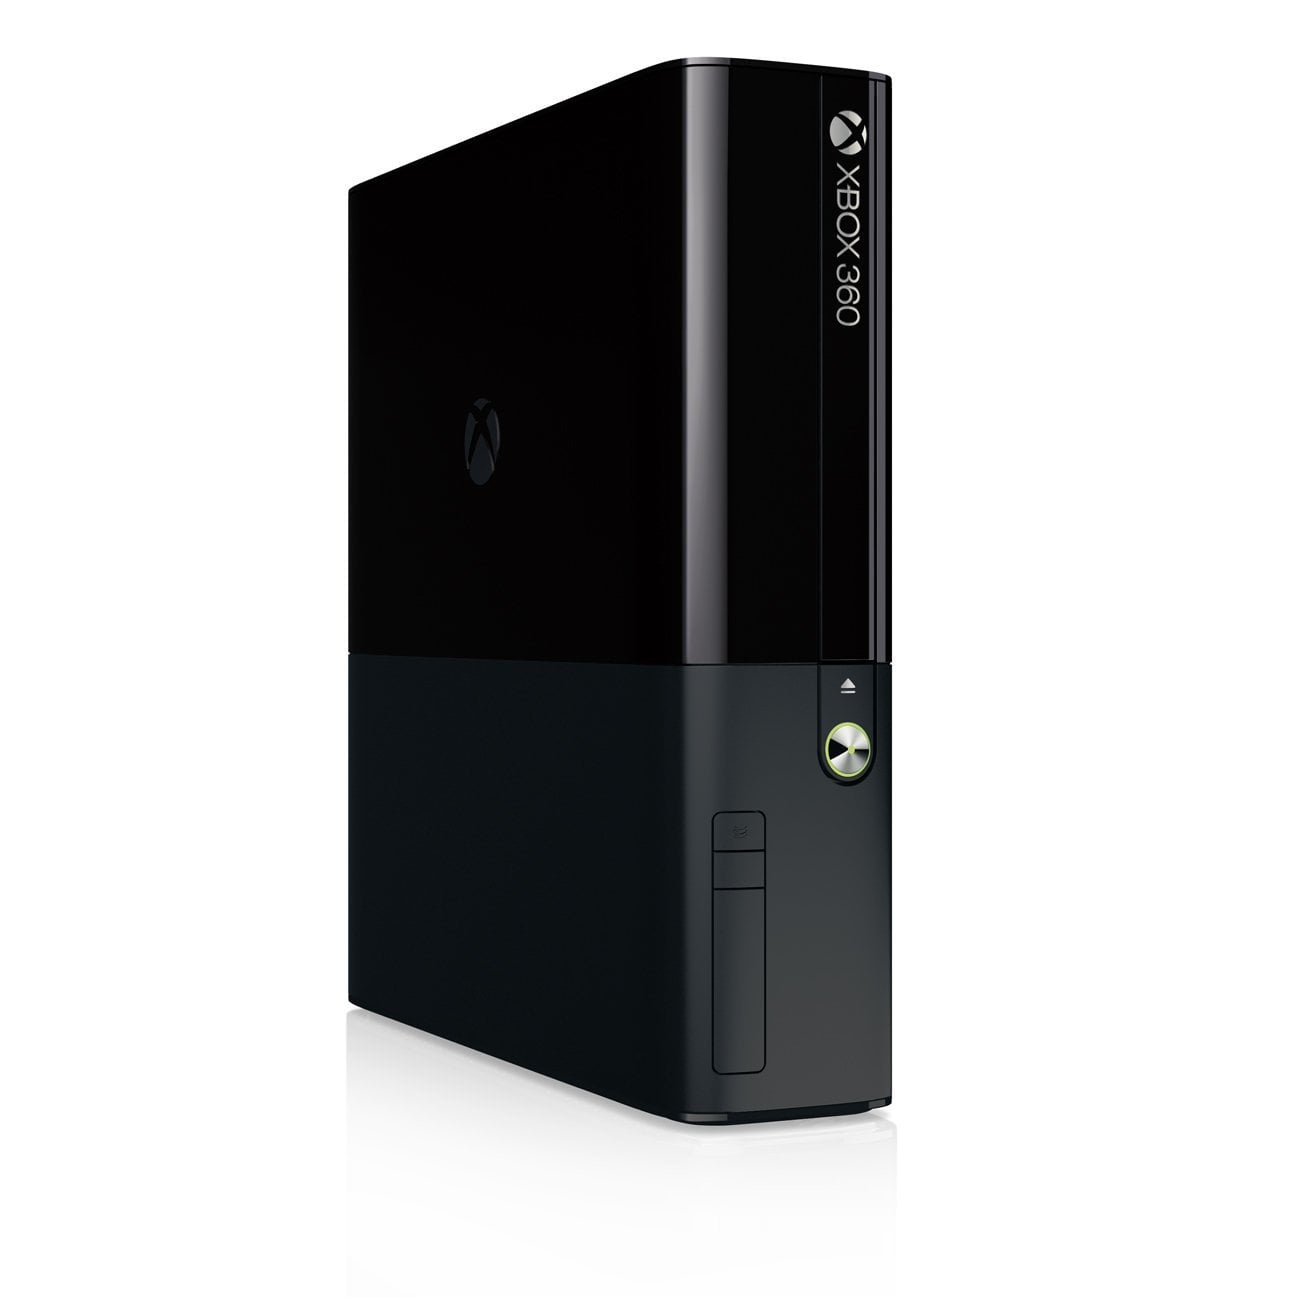 Microsoft Xbox 360 S Slim 1439 4GB Video Game Console Black – NT